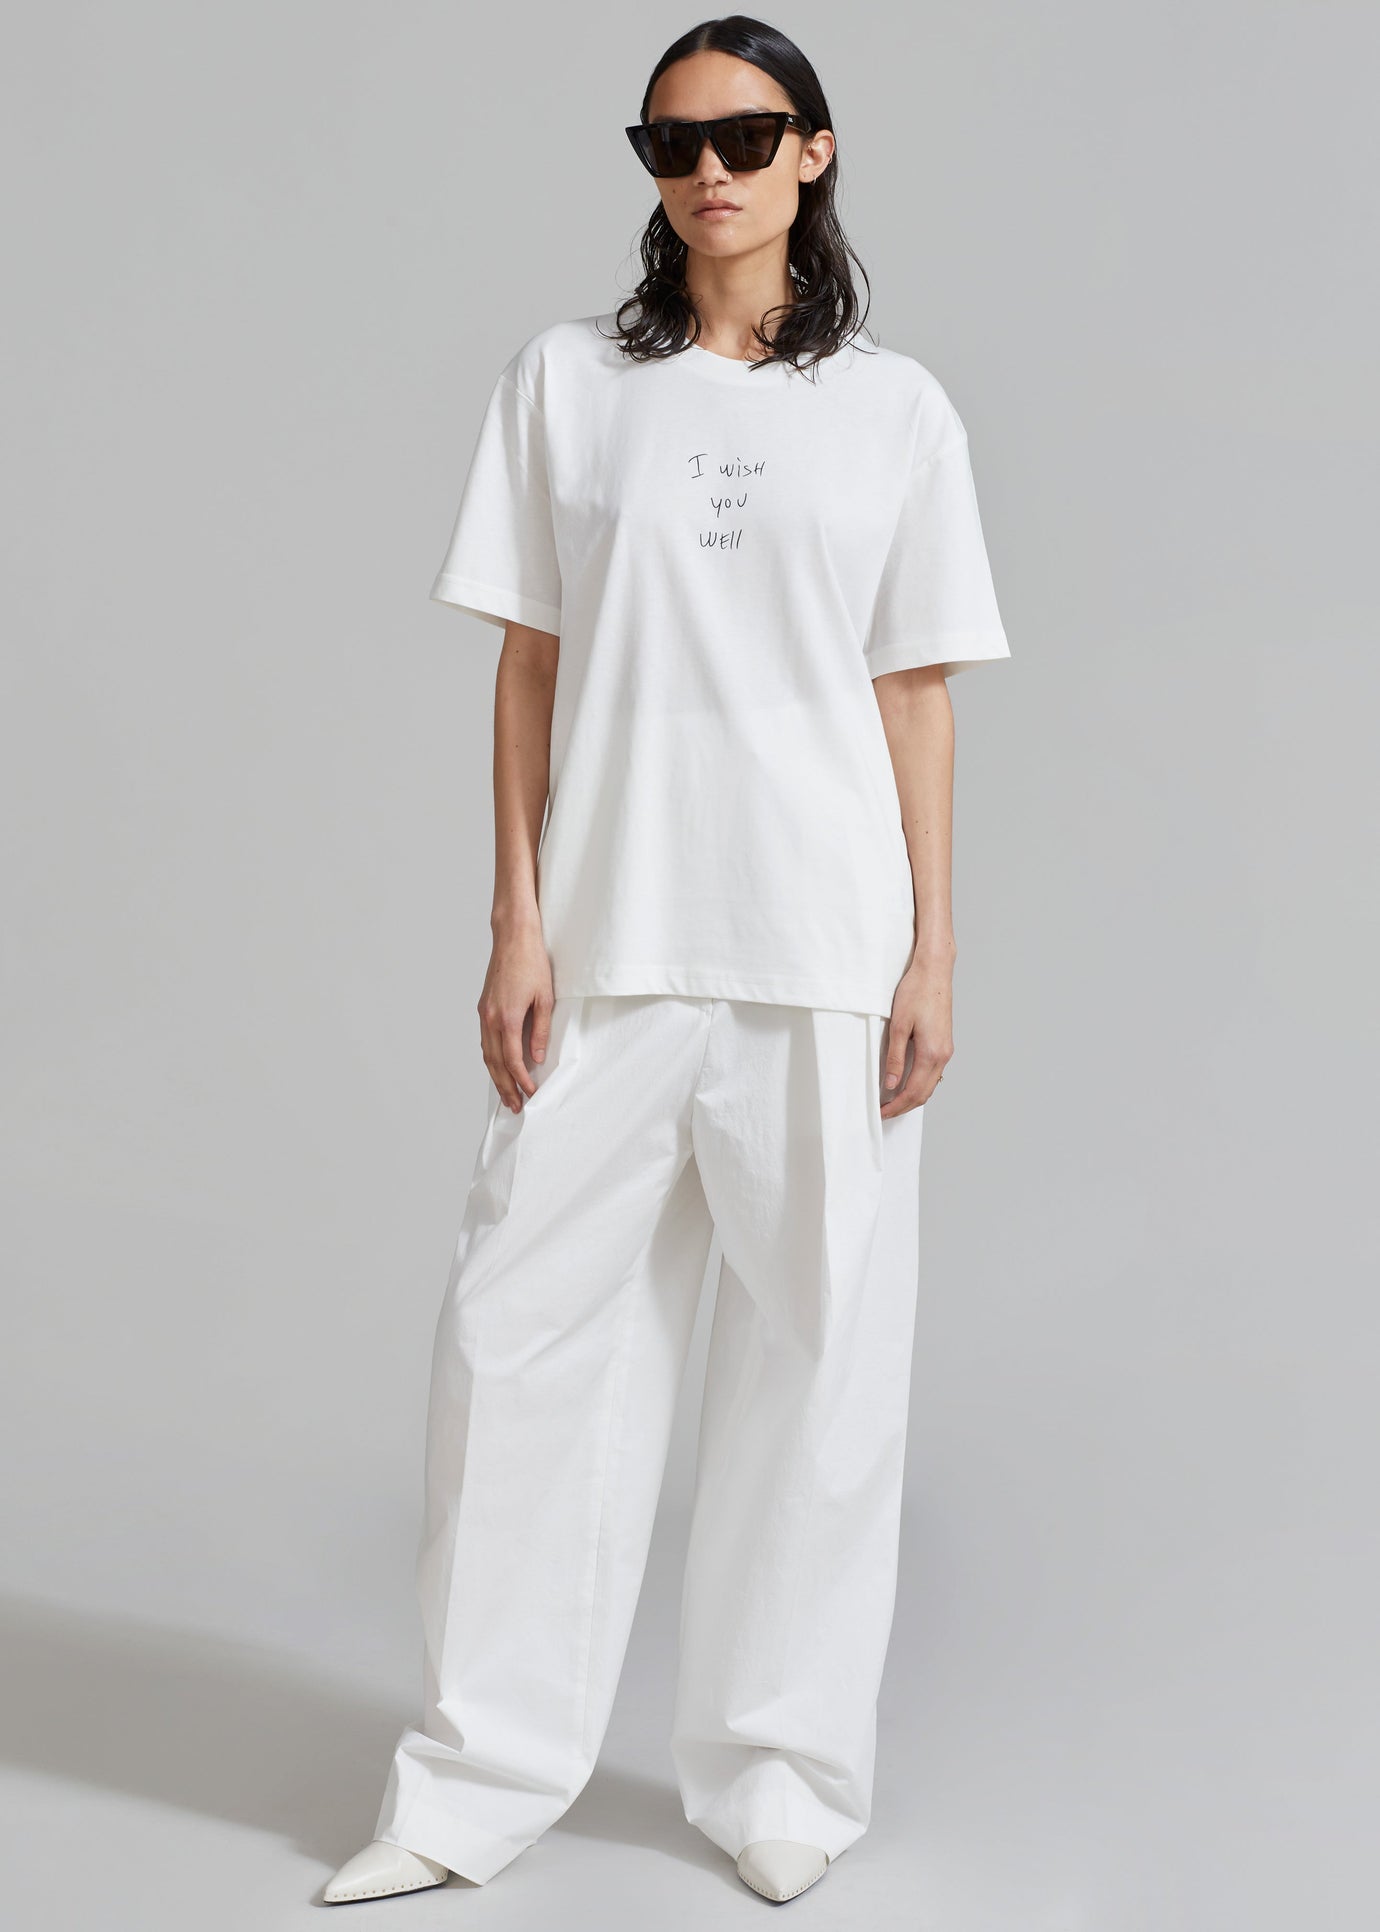 The Frankie Shop x Thomas Lélu Slope T-Shirt - Off White/Black - 1